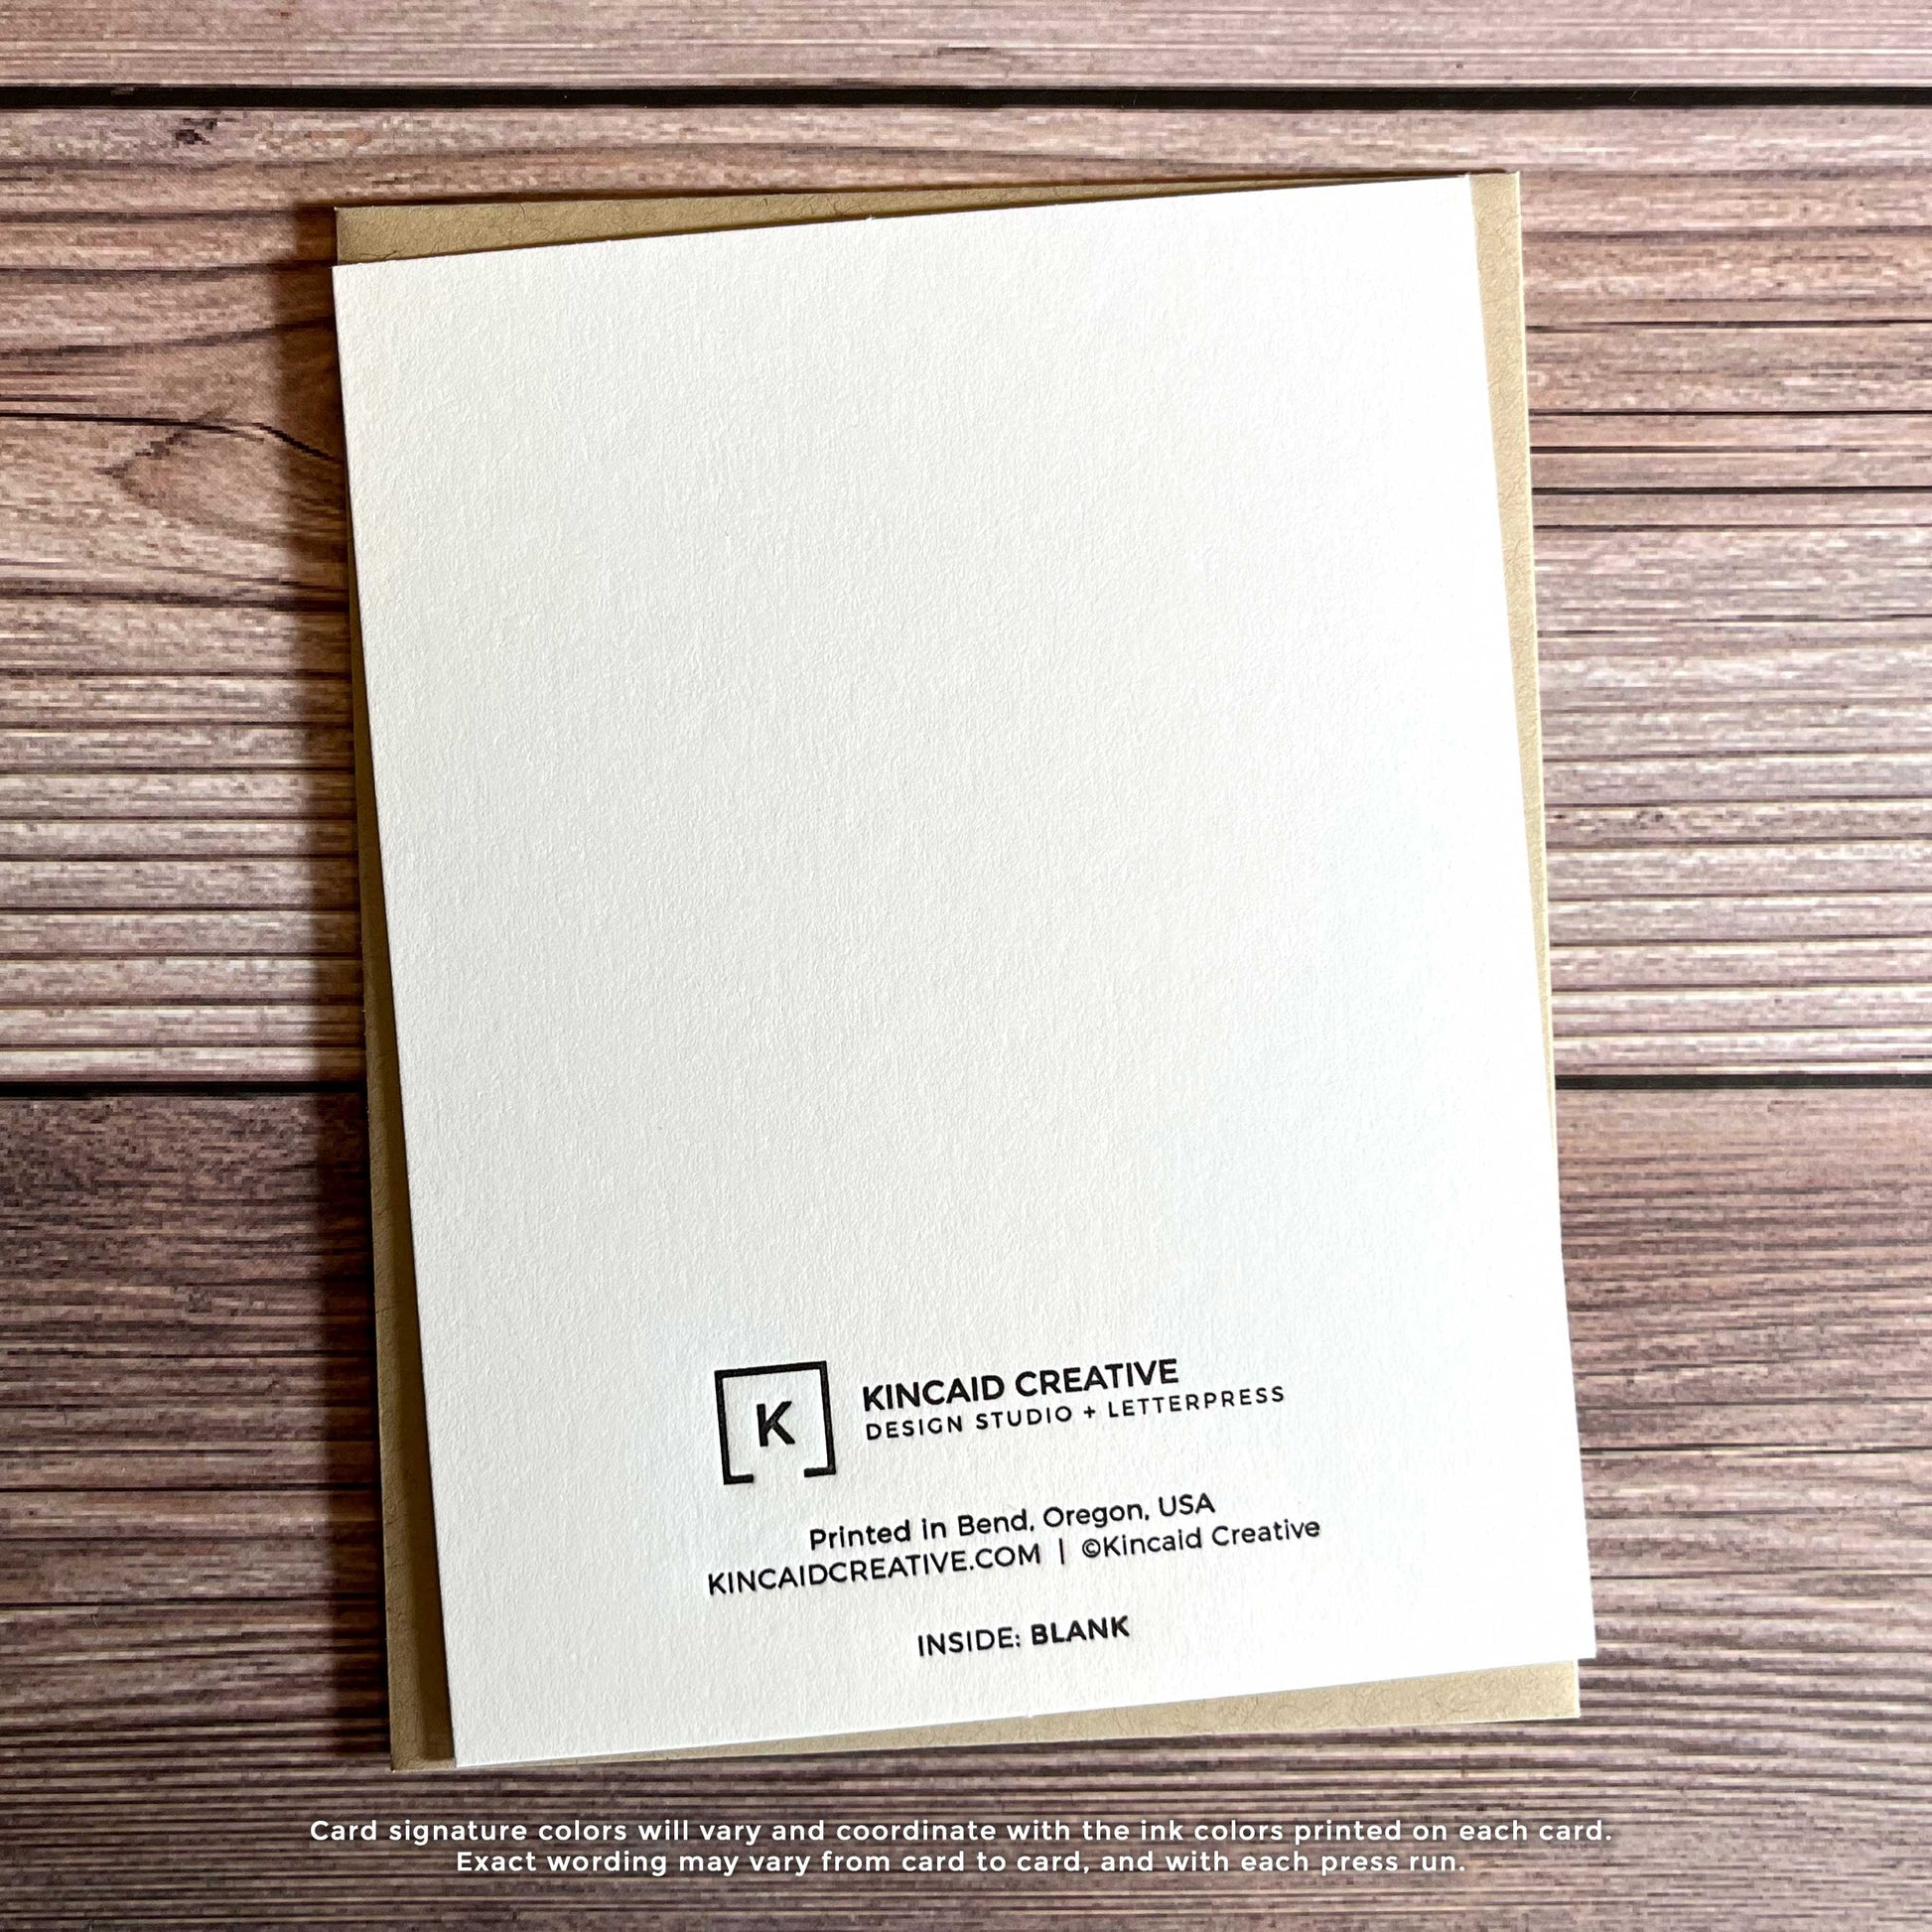 Letterpress Apology greeting card, blank inside, back view of card, Kincaid Creative Design and Letterpress Studio, Bend, Oregon